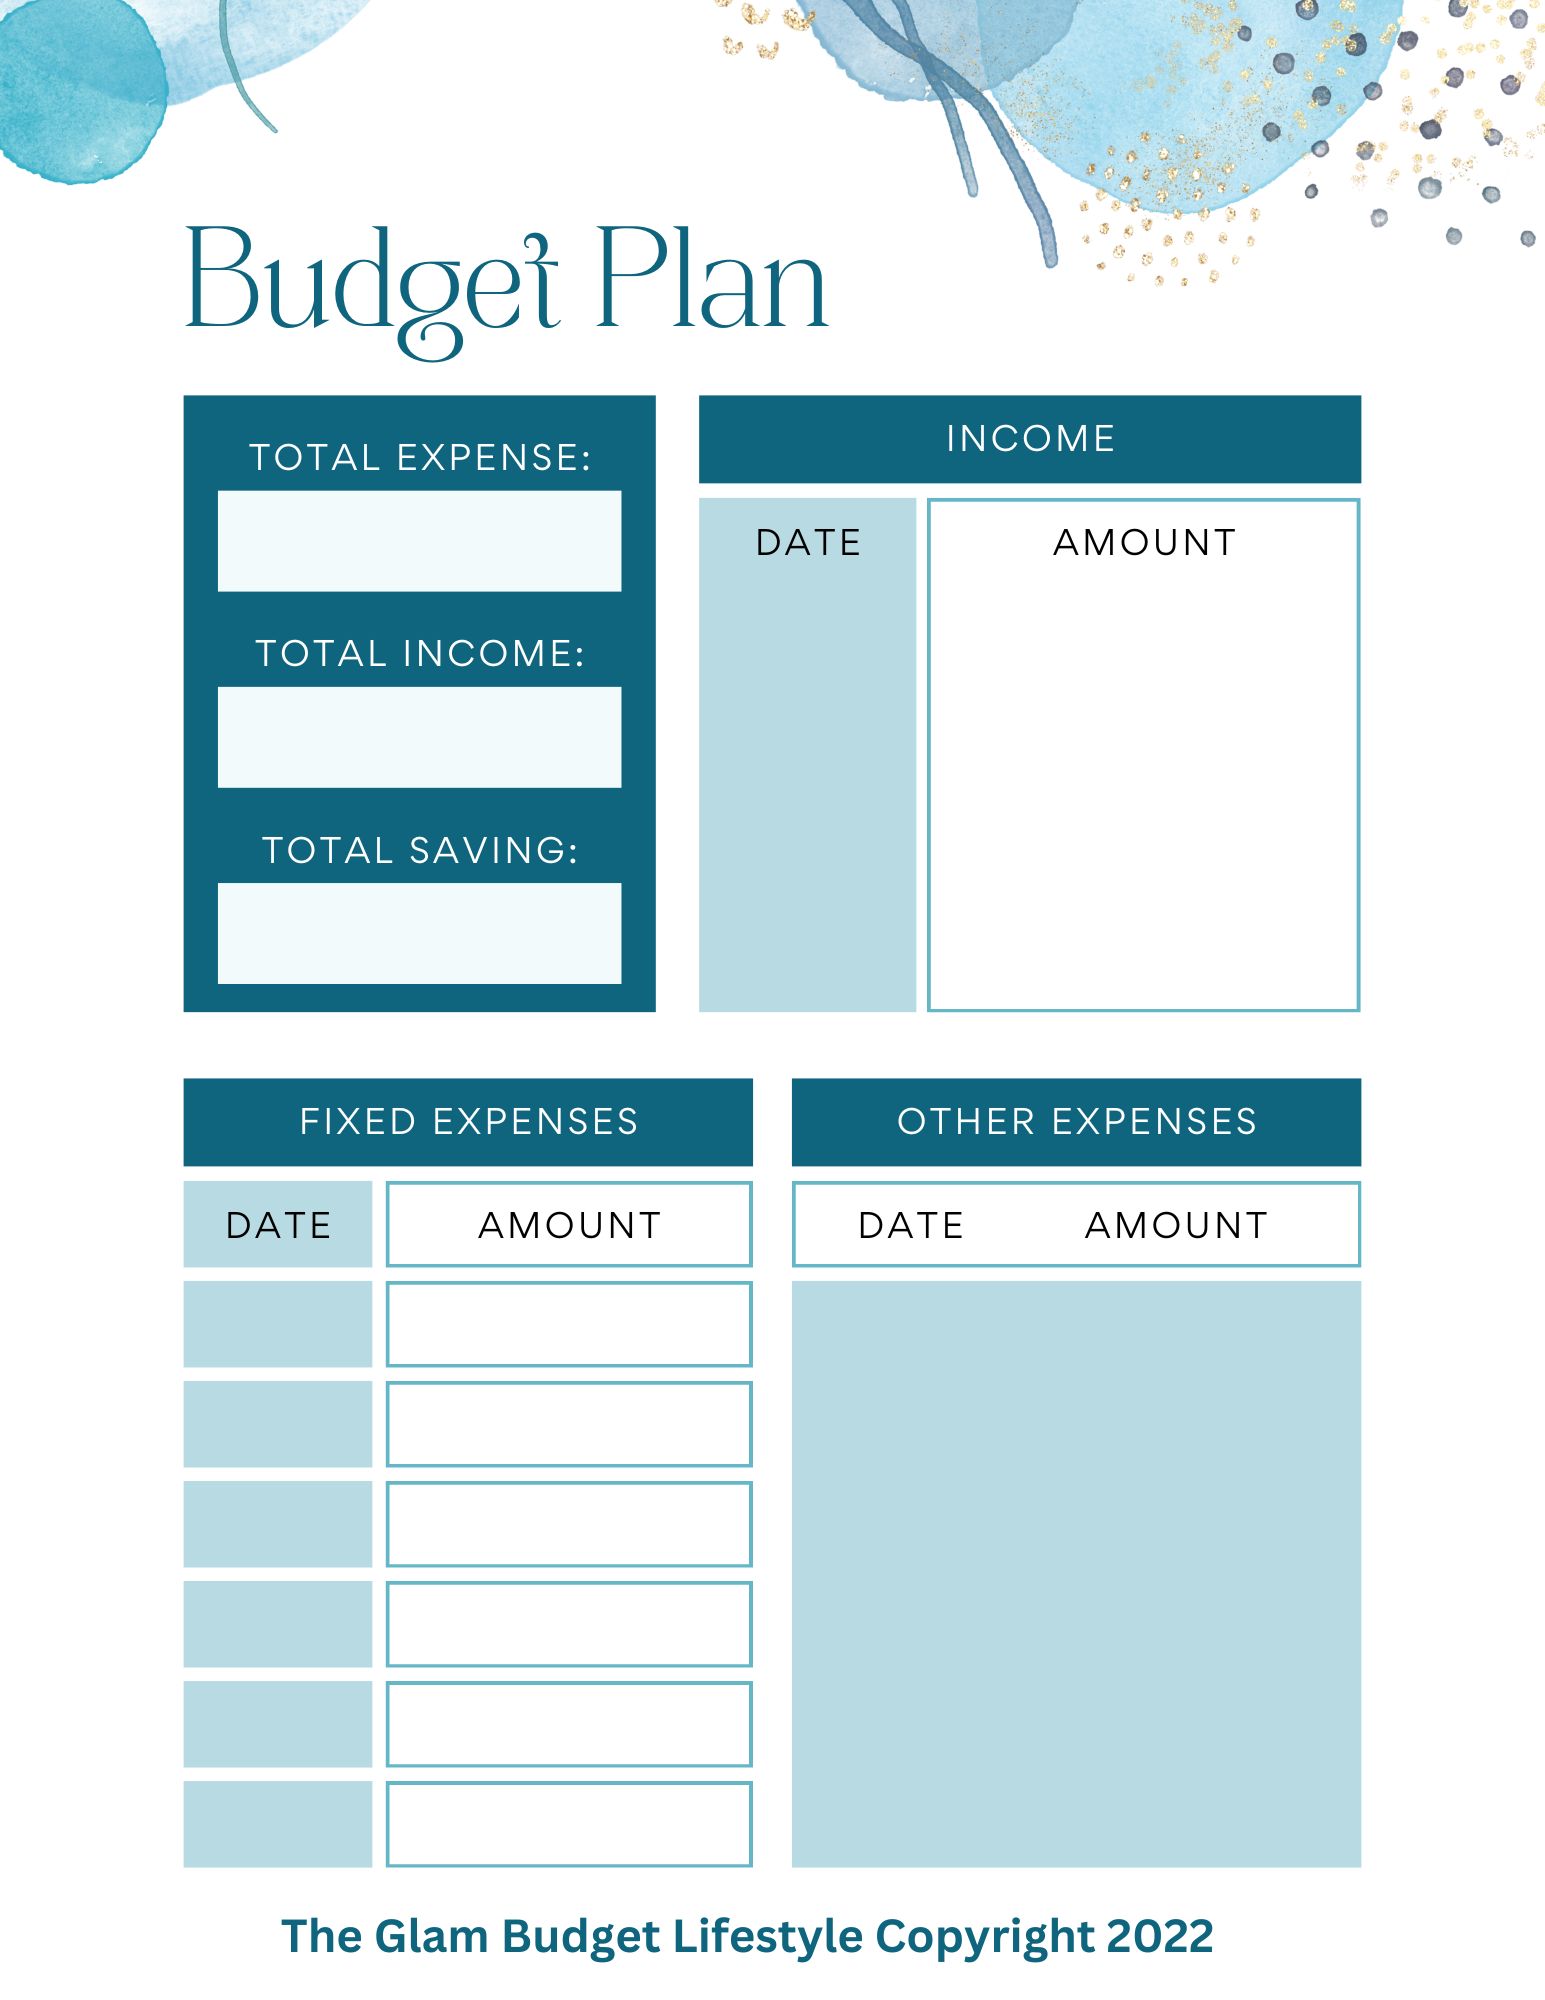 Budget Planner #1